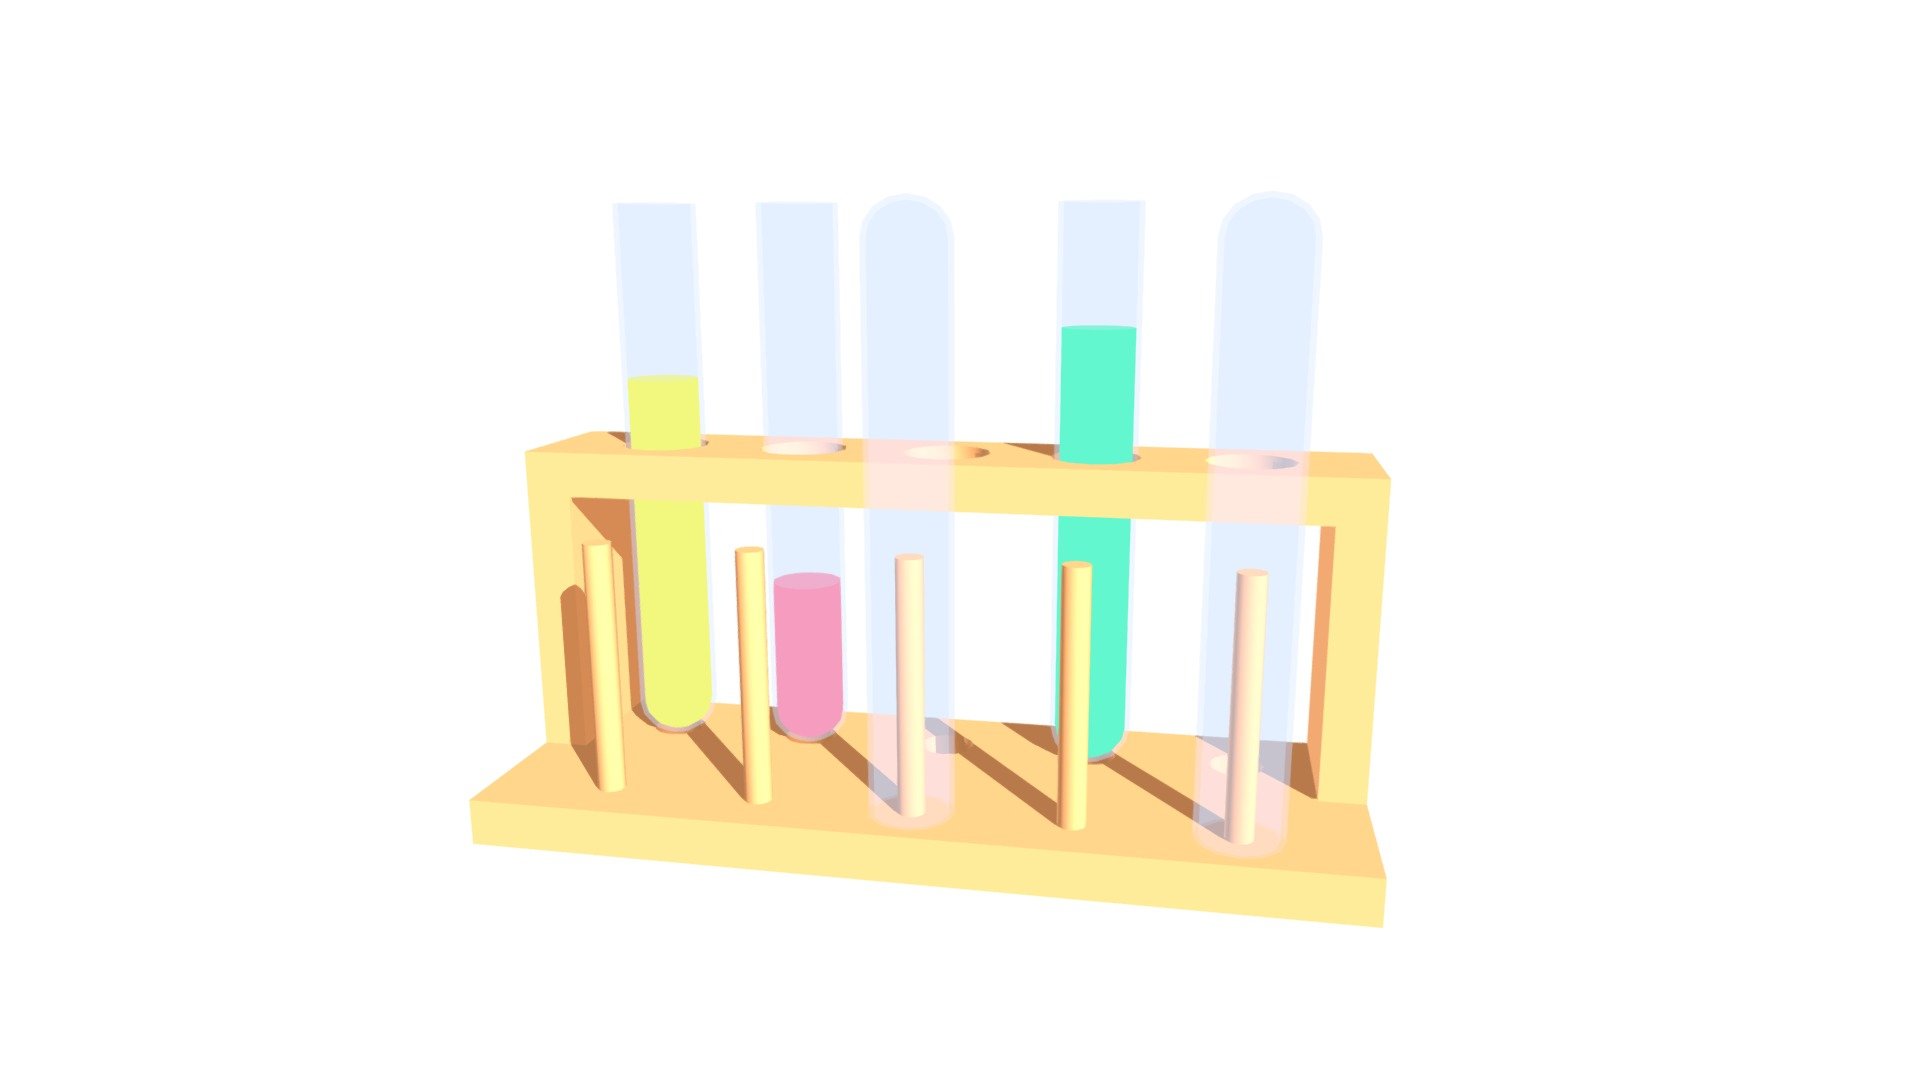 Sketchfab 3December - Day 3 - CHEMISTRY

Some test tubes for the chemistry lab 3d model